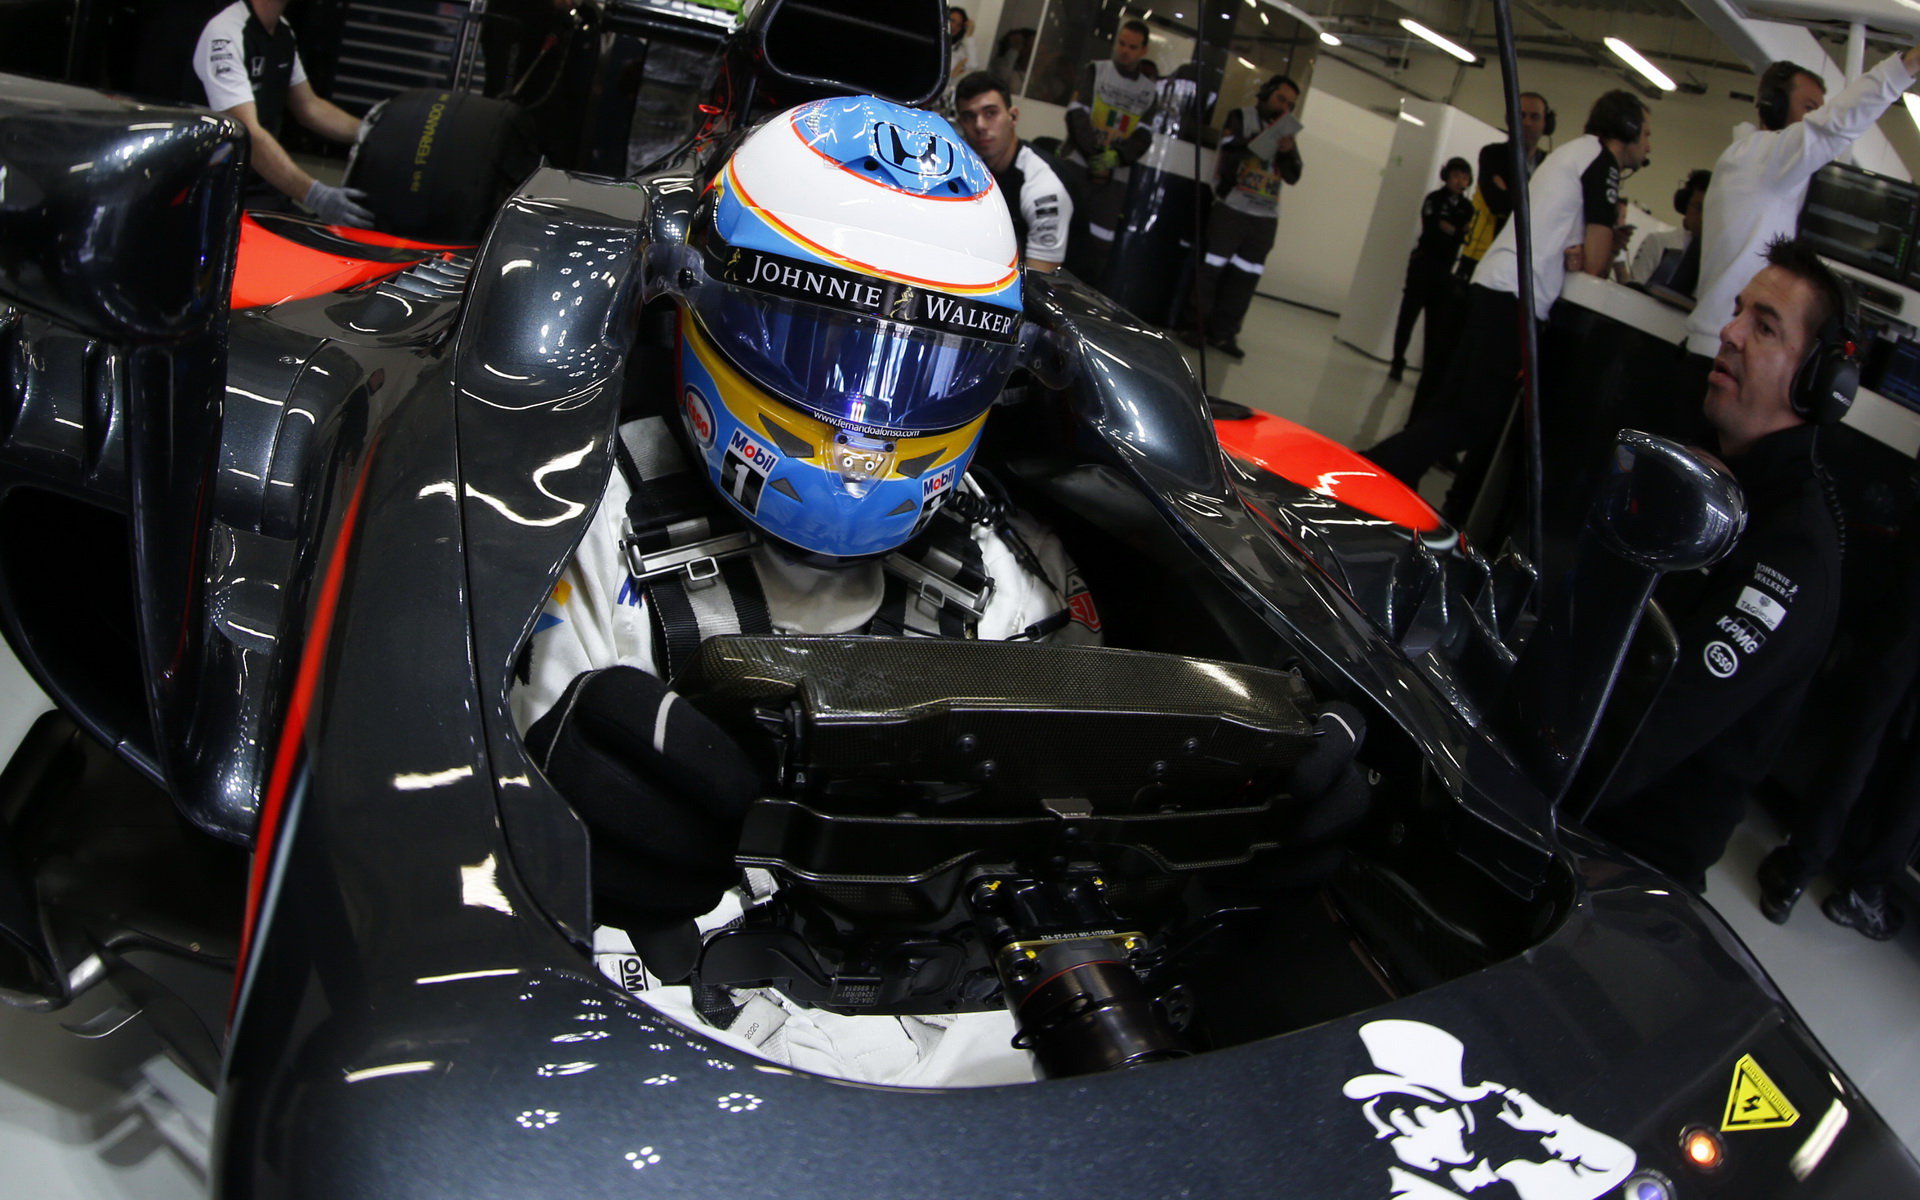 Teď už Alonso o kvalitách motoru informuje výše postavené jedince